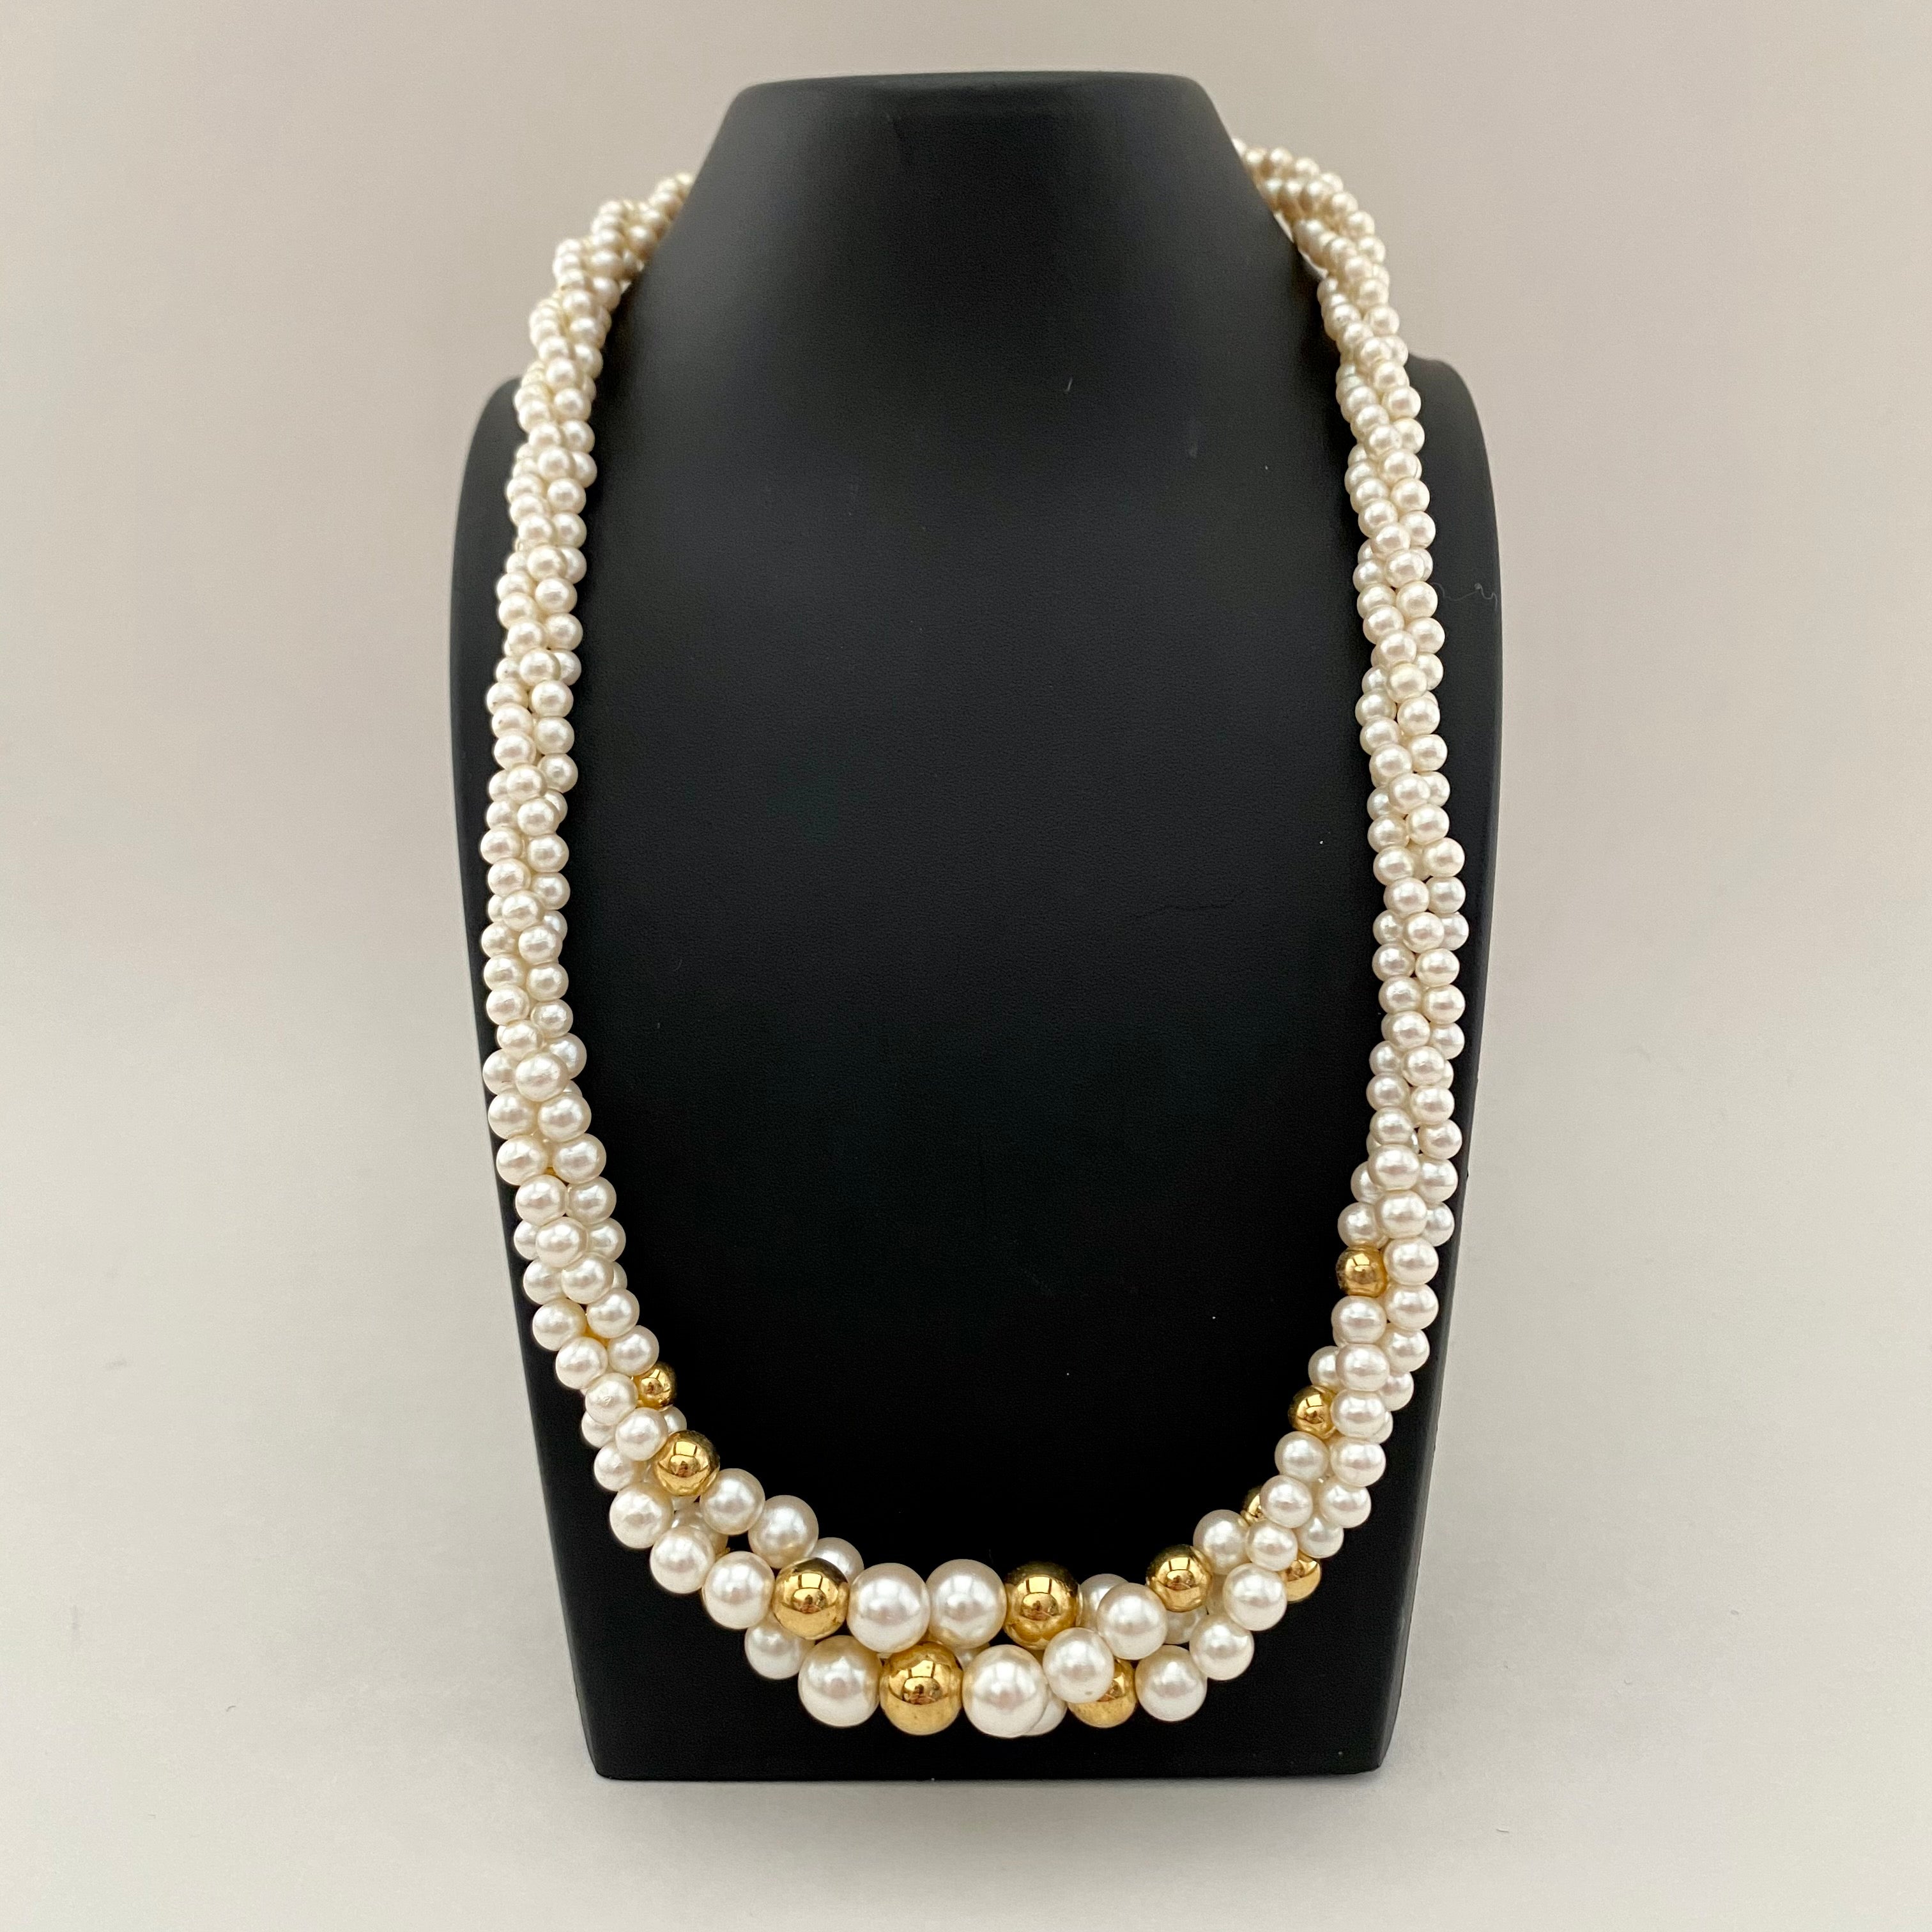 BEAUTIFUL VINTAGE GOLD-TONE Faux Pearl Necklace by Napier Jewellery 40cm  £48.99 - PicClick UK